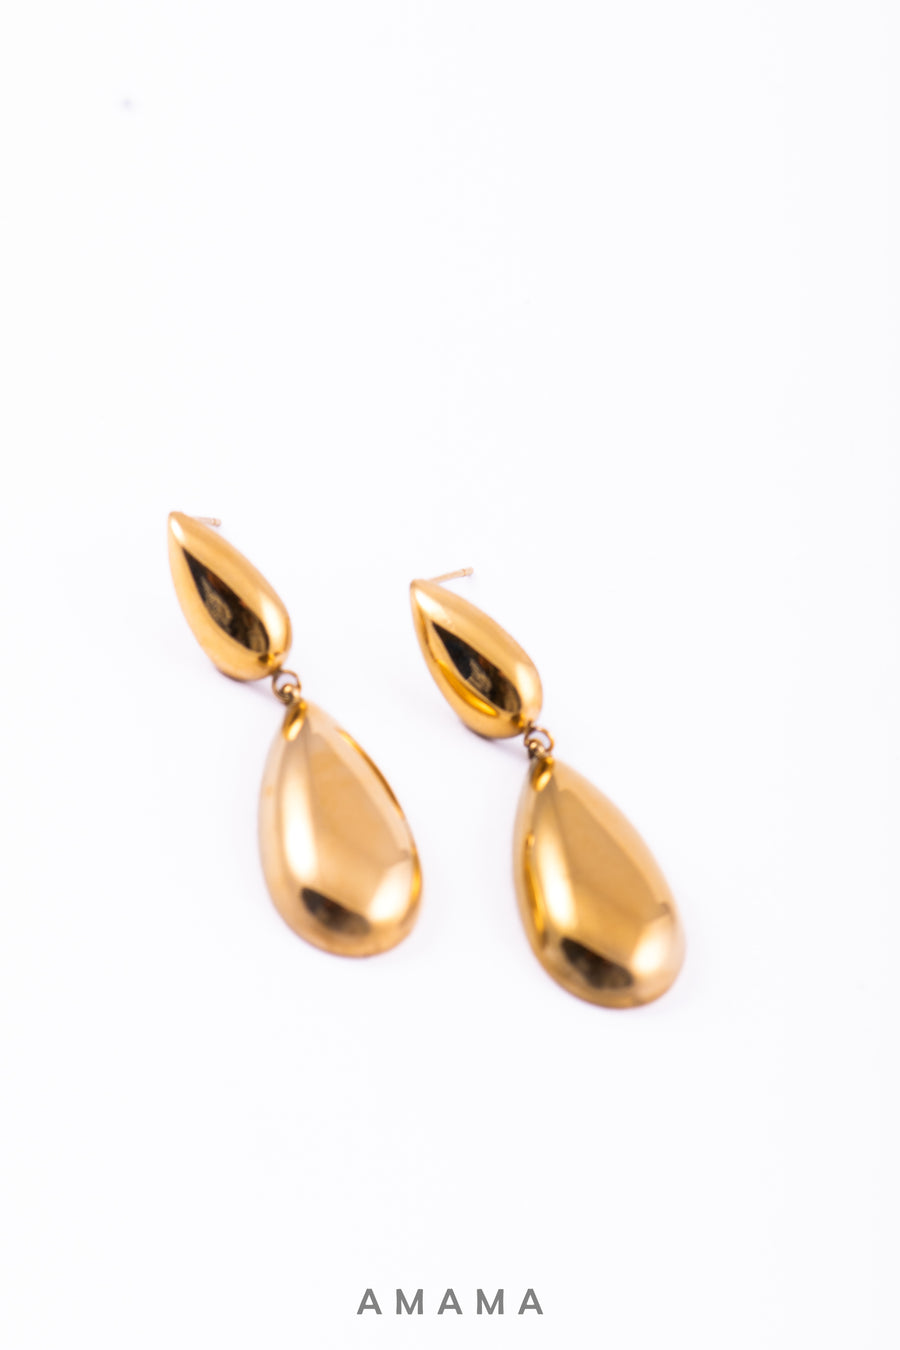 Amama Gold Earring